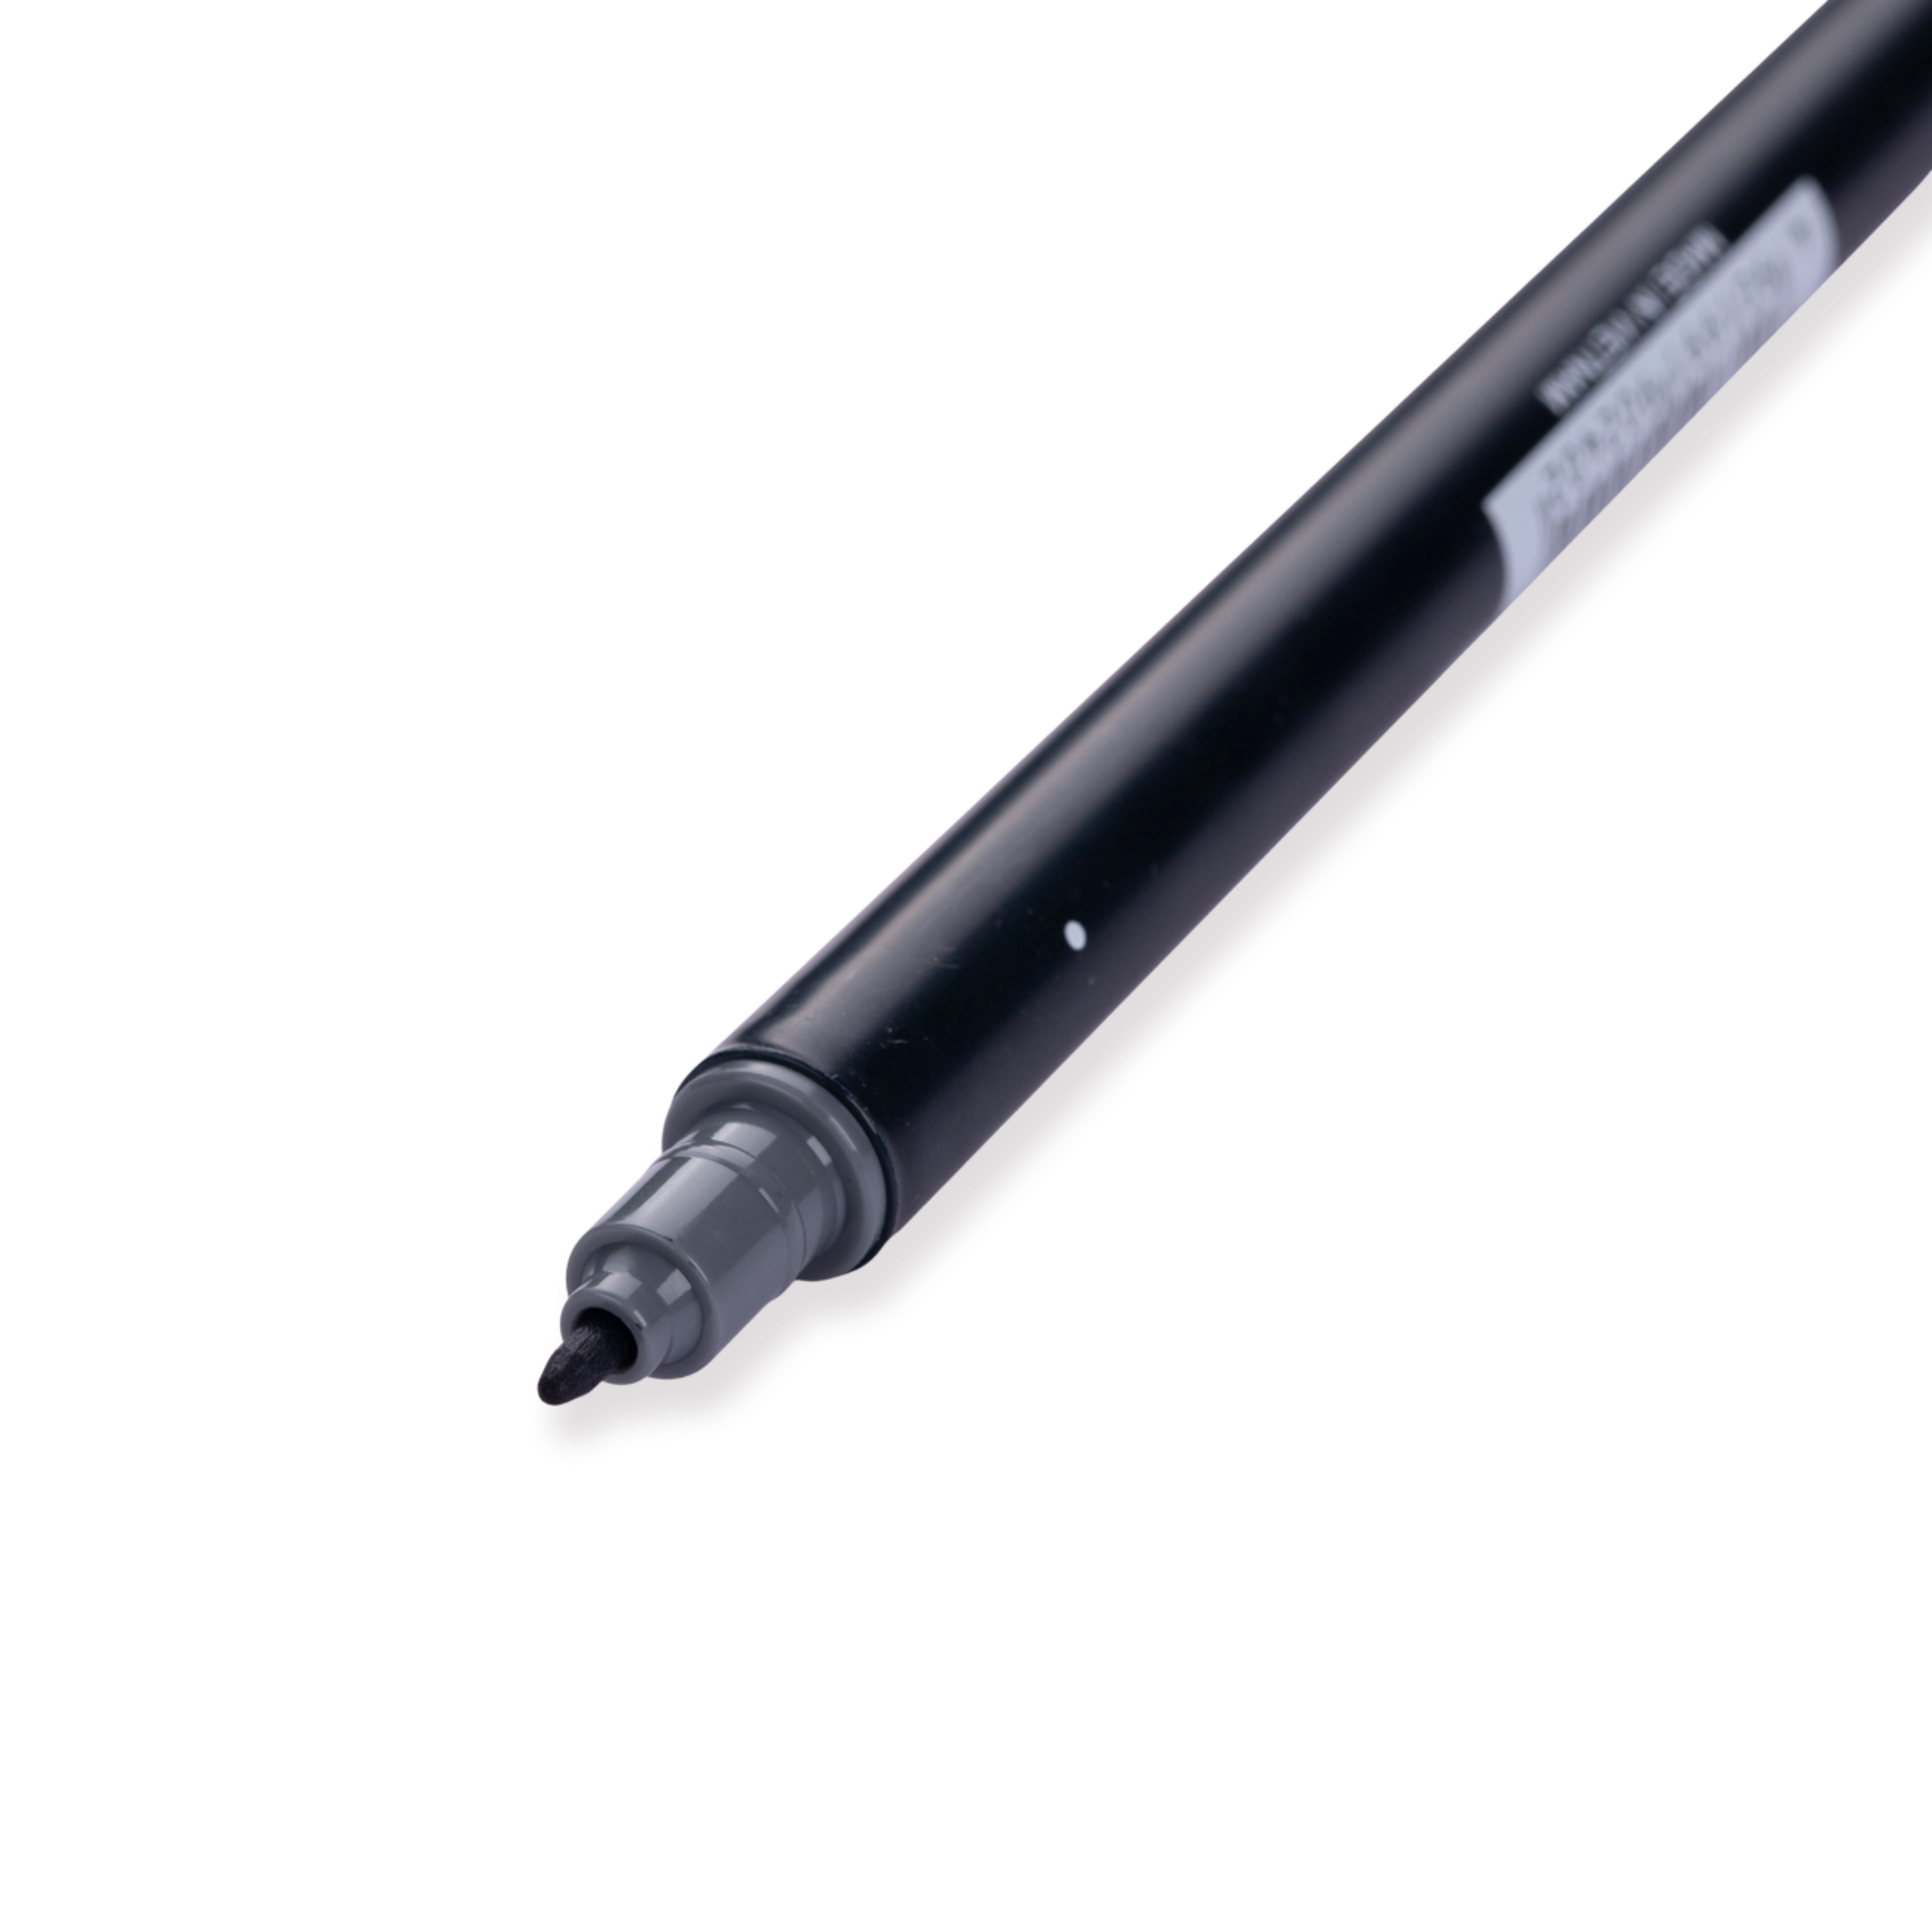 Tombow Dual Brush Pen Graustufen - N45 - Cool Gray 10